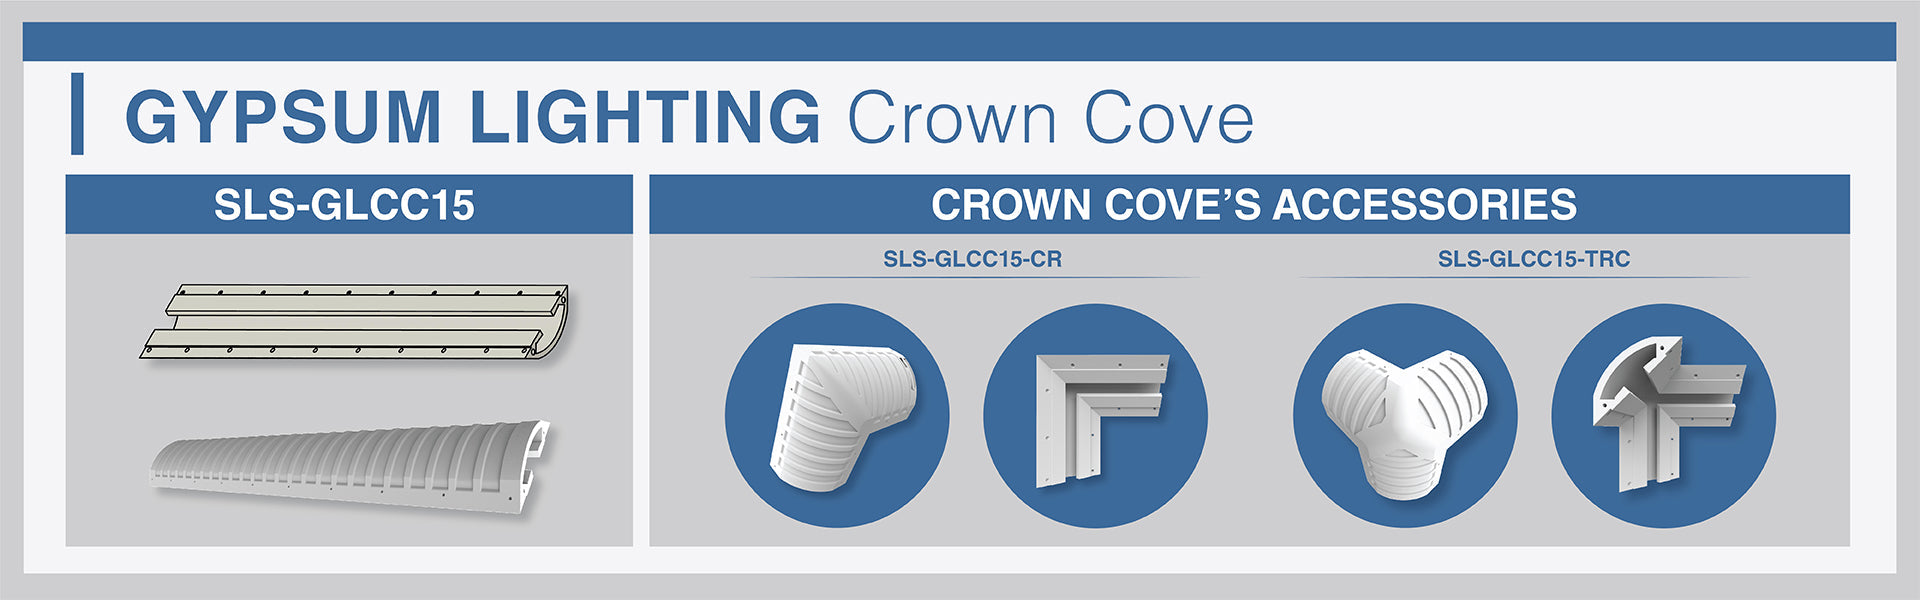 Gypsum Lighting Crown Coves